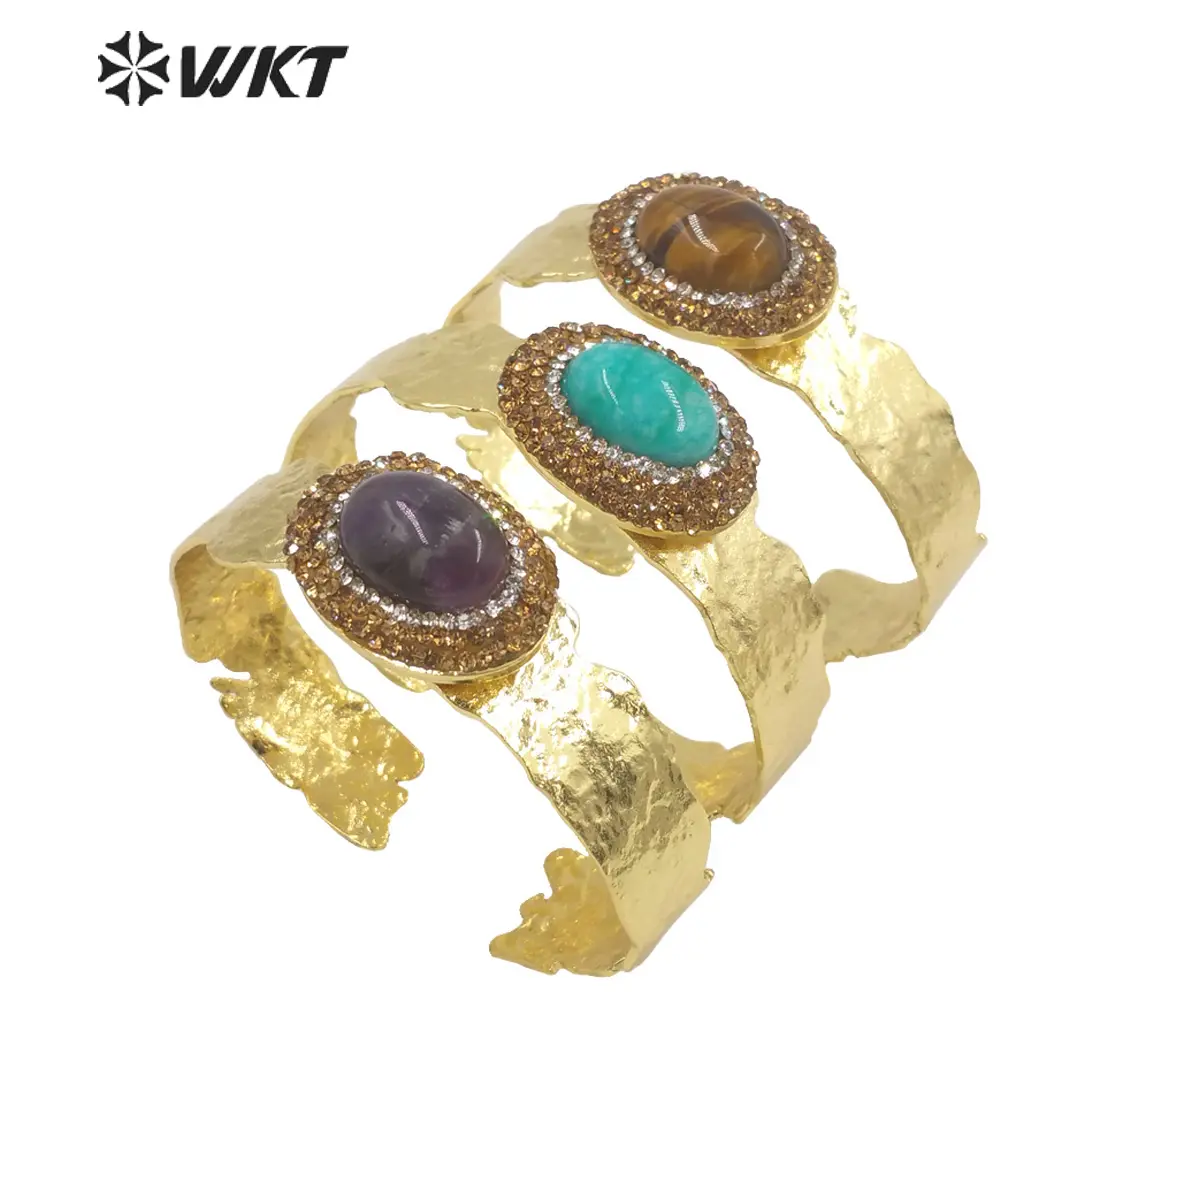 WT-B628ヨーロッパカラフルな貴重な宝石用原石オープニングバングル、ラインストーンセッティング女性用楕円形アメジスト石バングル